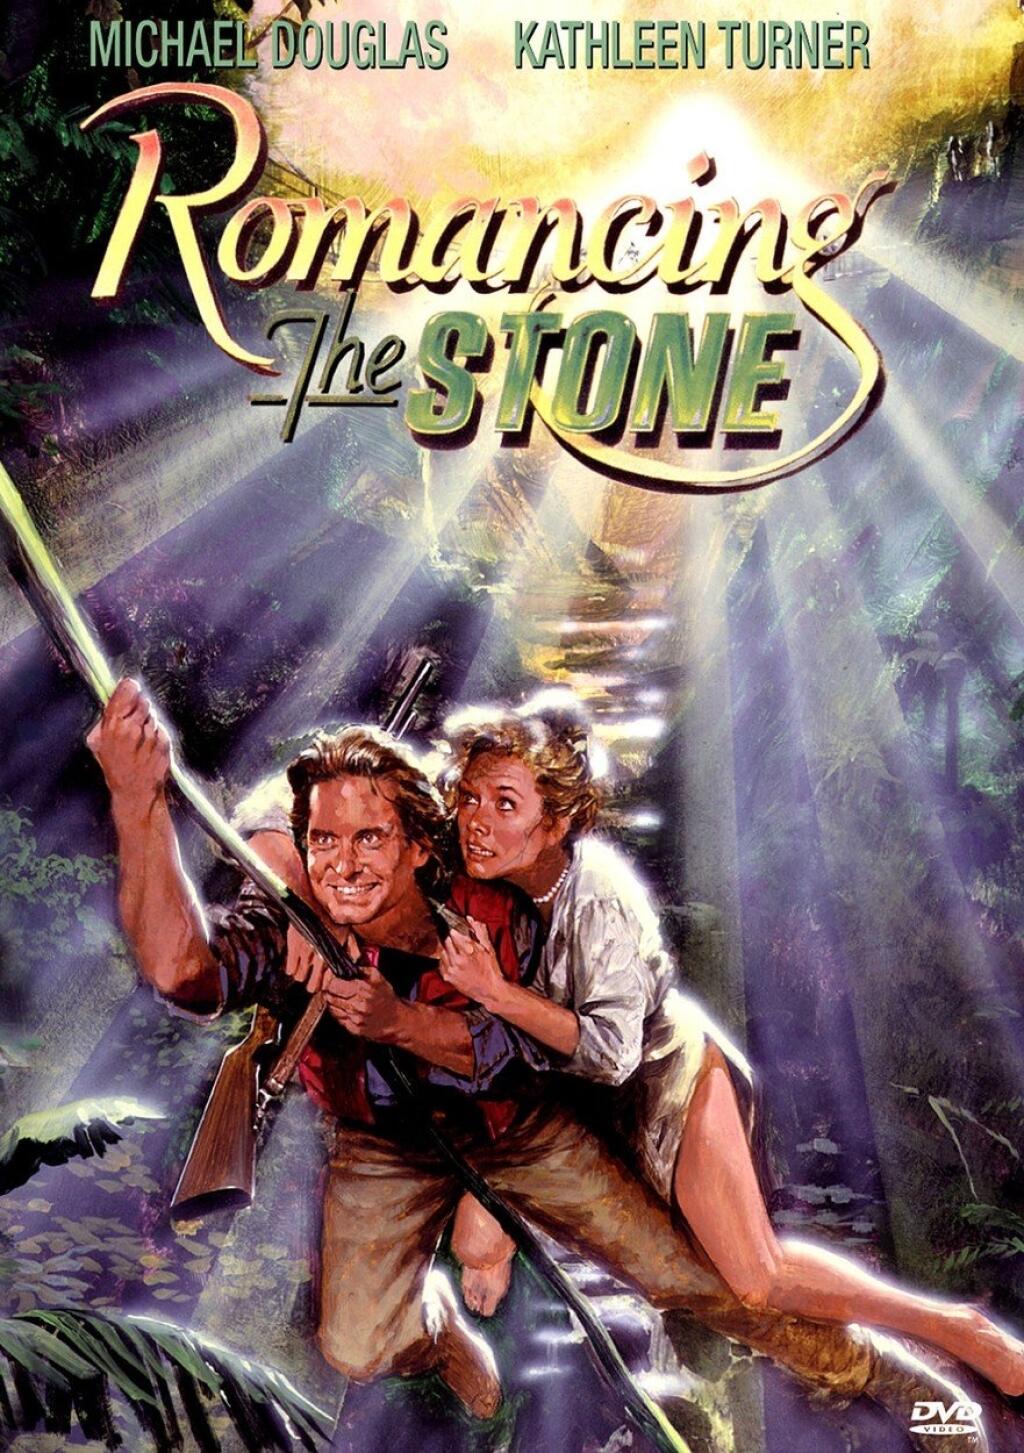 Stiahni si Filmy CZ/SK dabing Honba za diamantem - Romancing the Stone (1984)(Remastered)(1080p)(2xCZ-SK-EN) = CSFD 78%